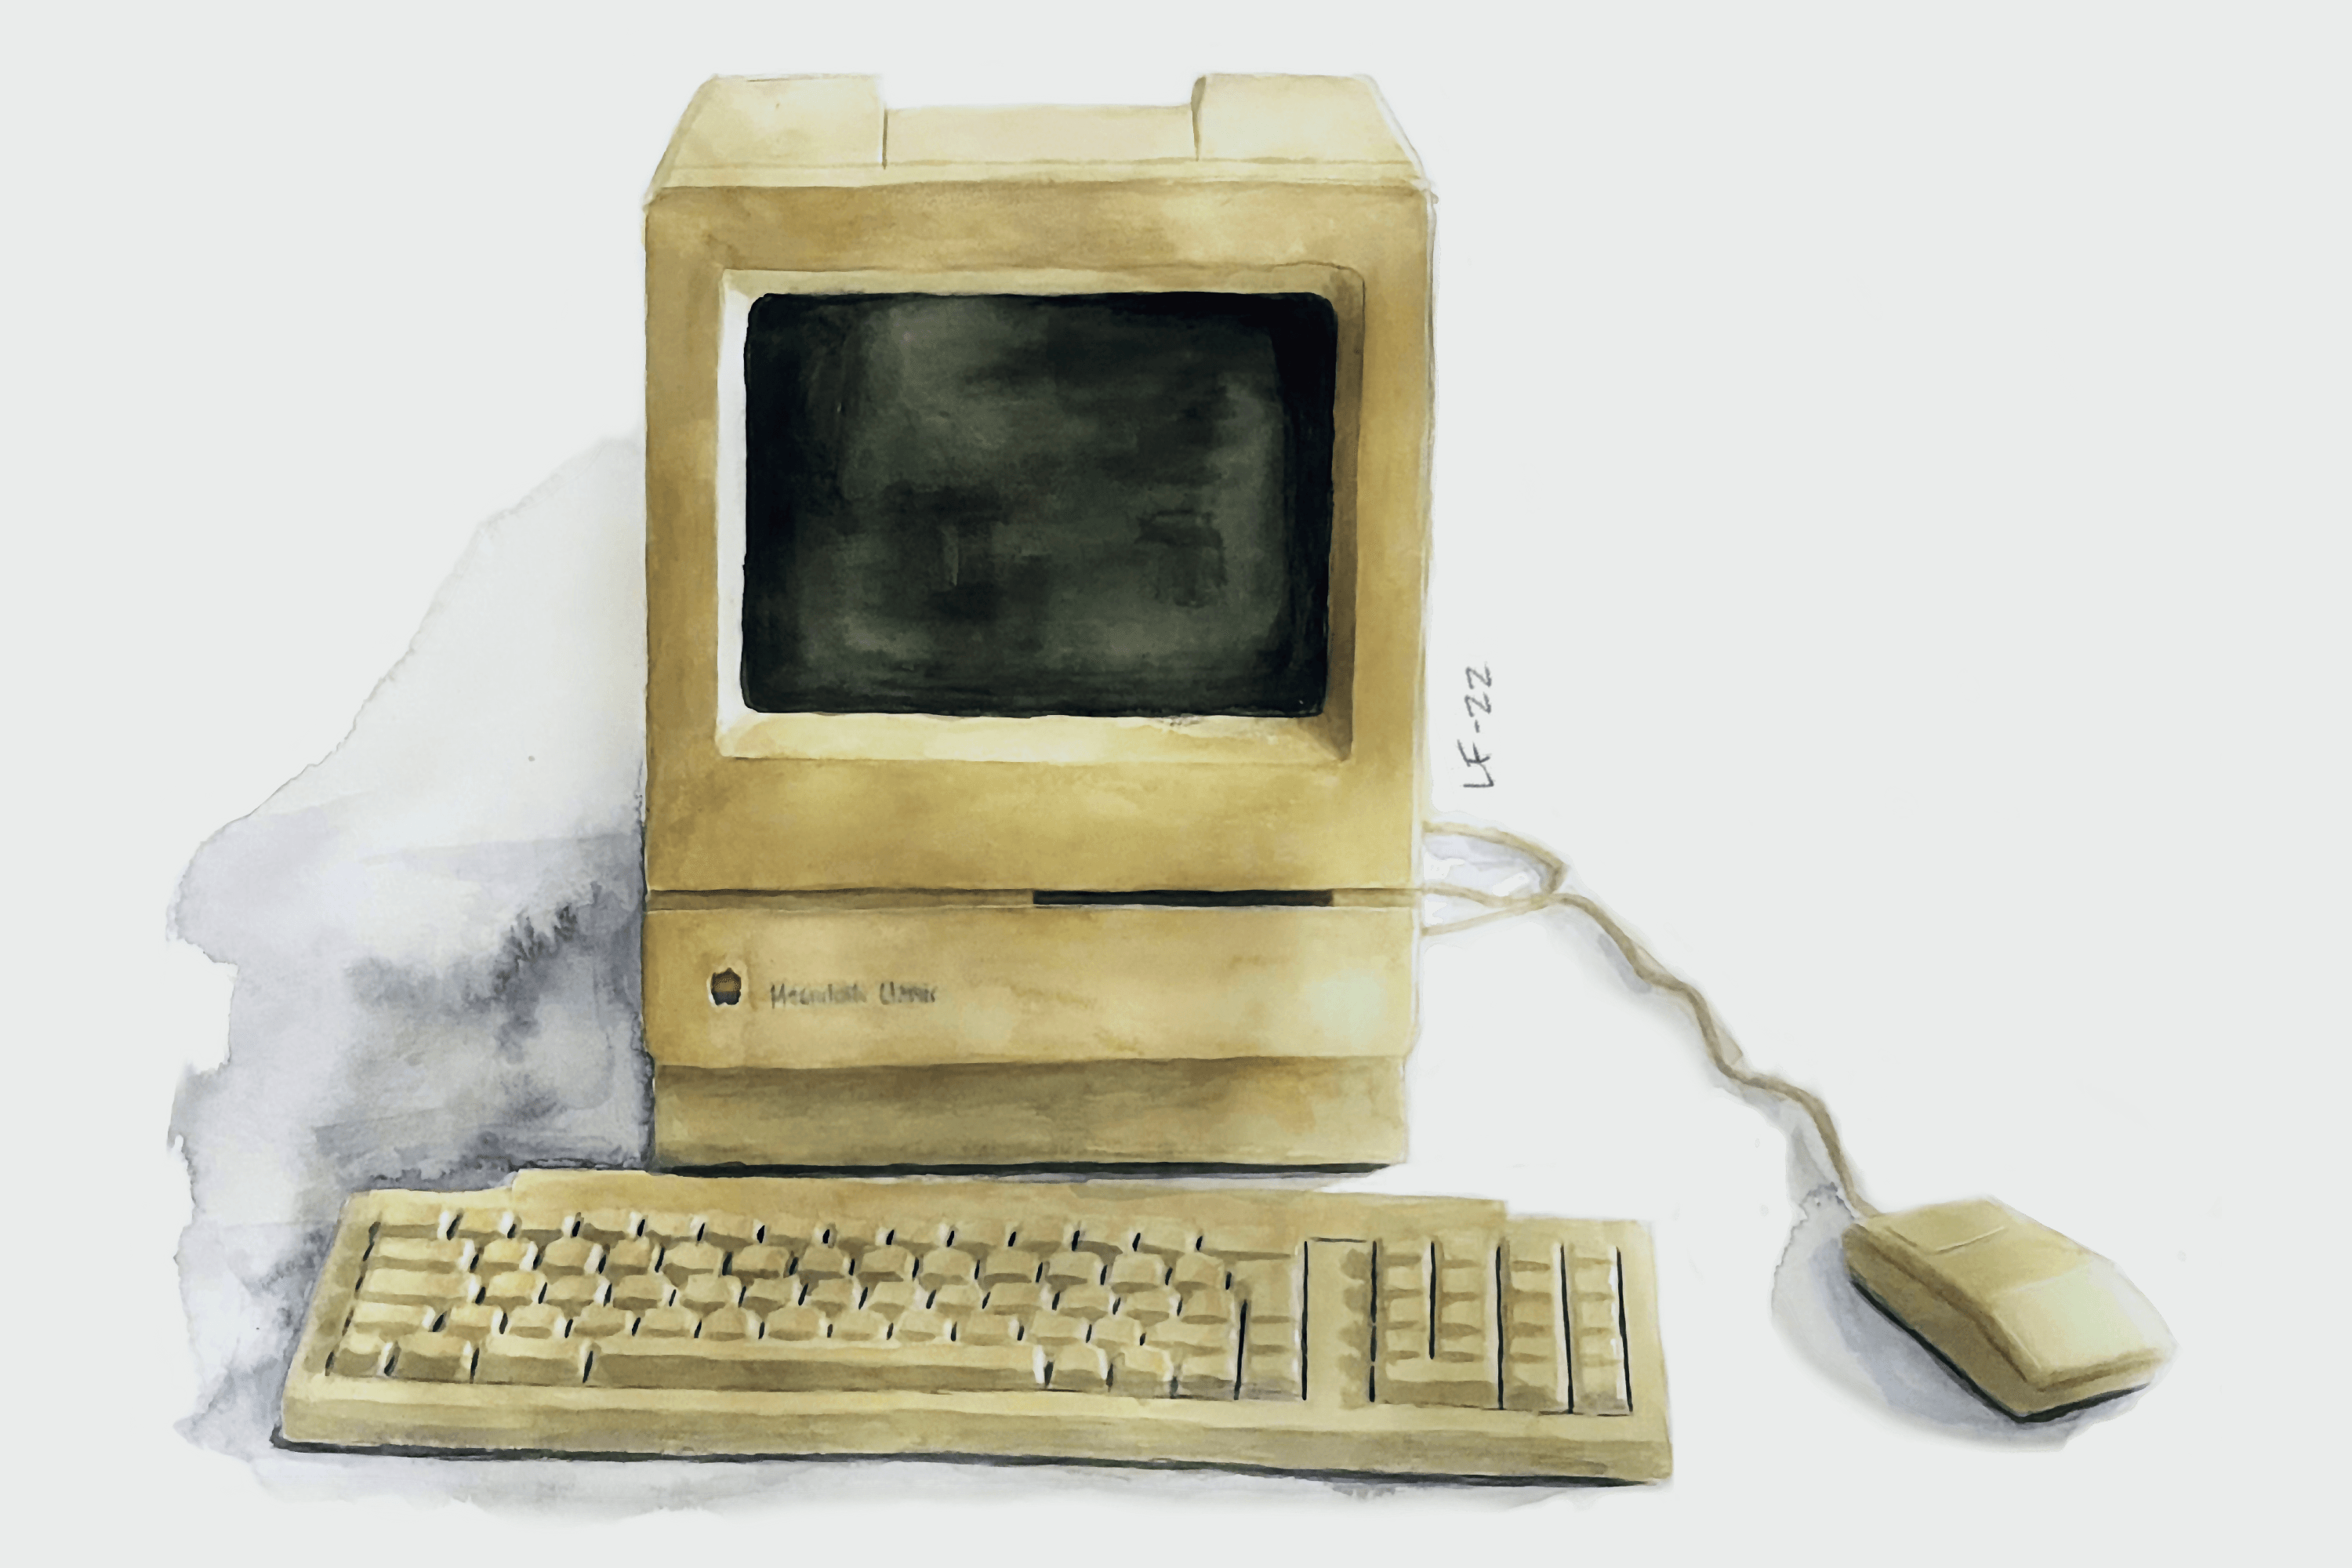 #24 Macintosh Classic